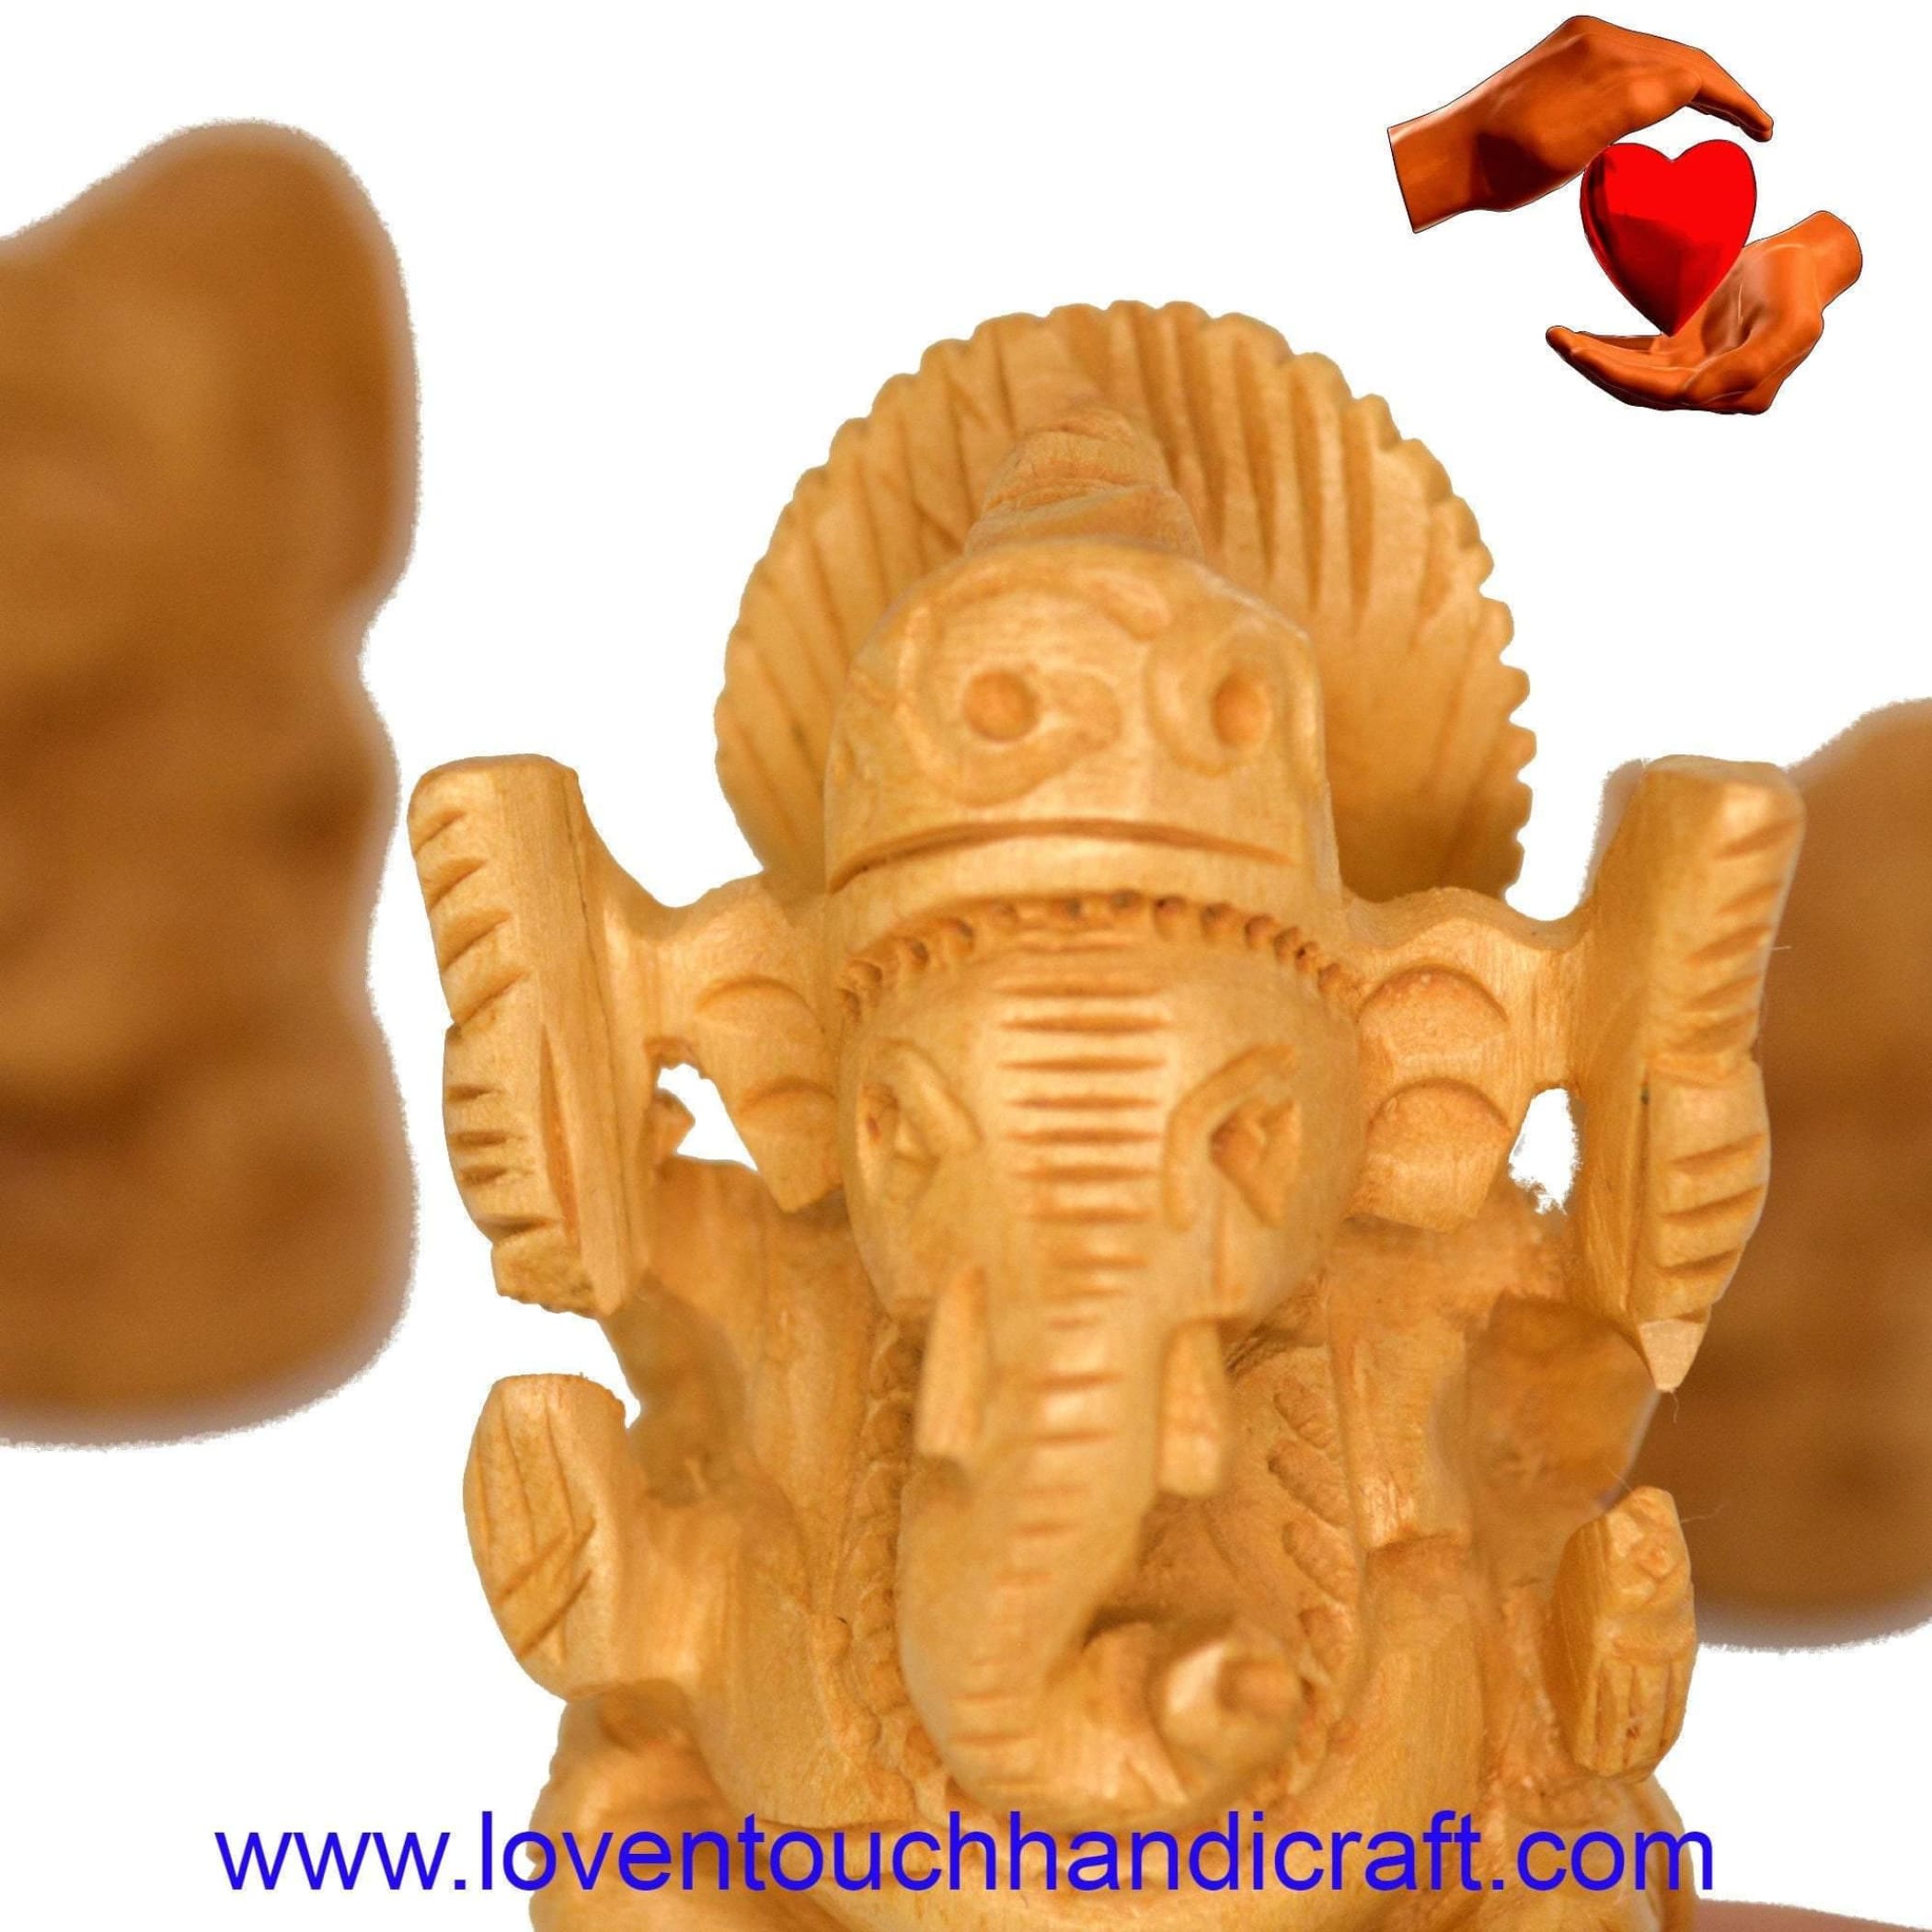 Wooden ganesh idol ganesha statue figurine indian art gift